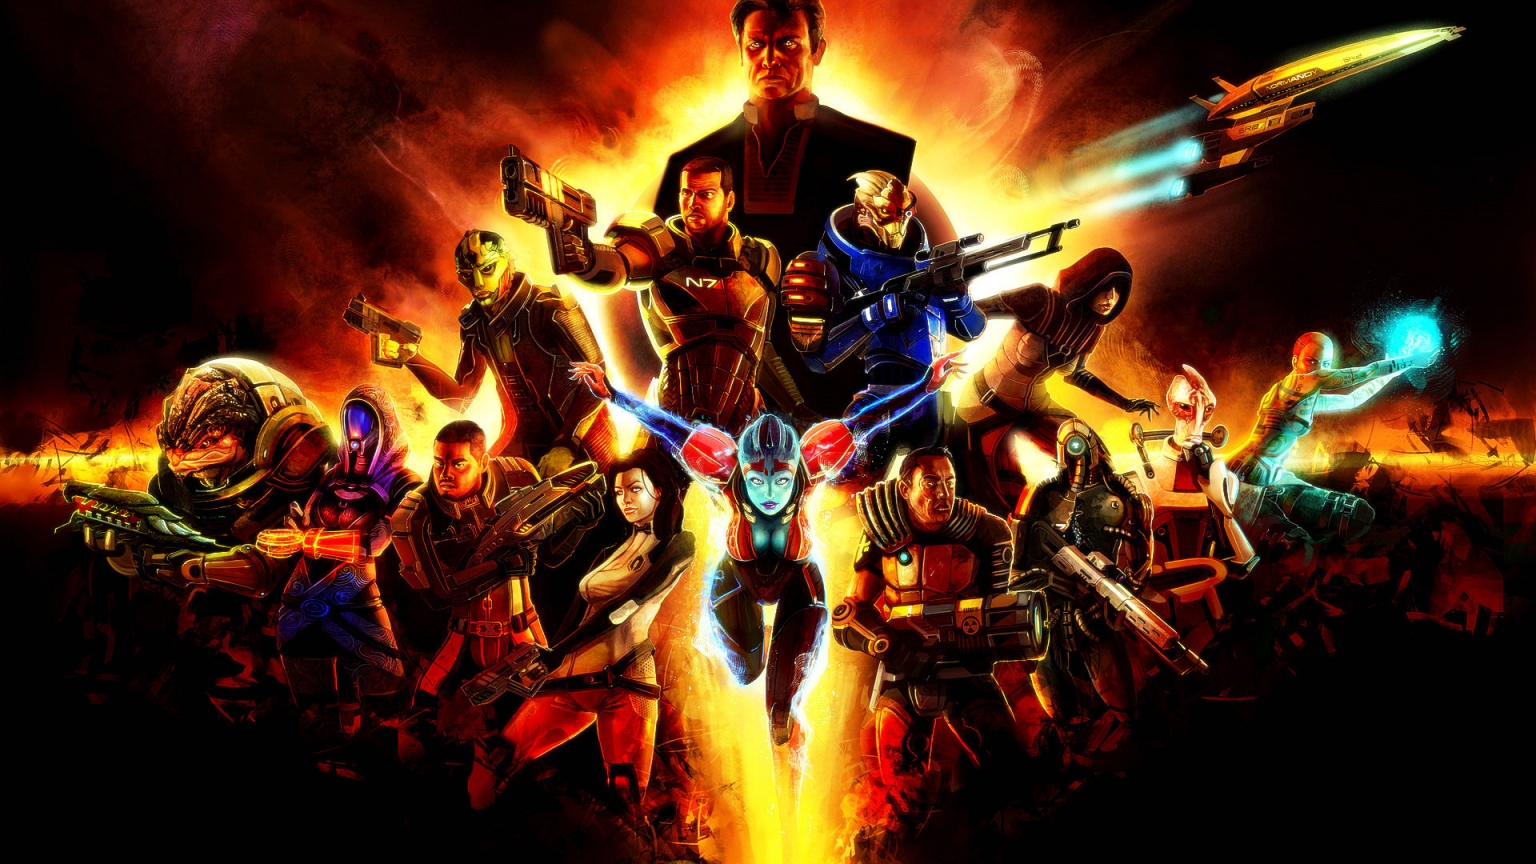 Mass Effect 2 Poster for 1536 x 864 HDTV resolution